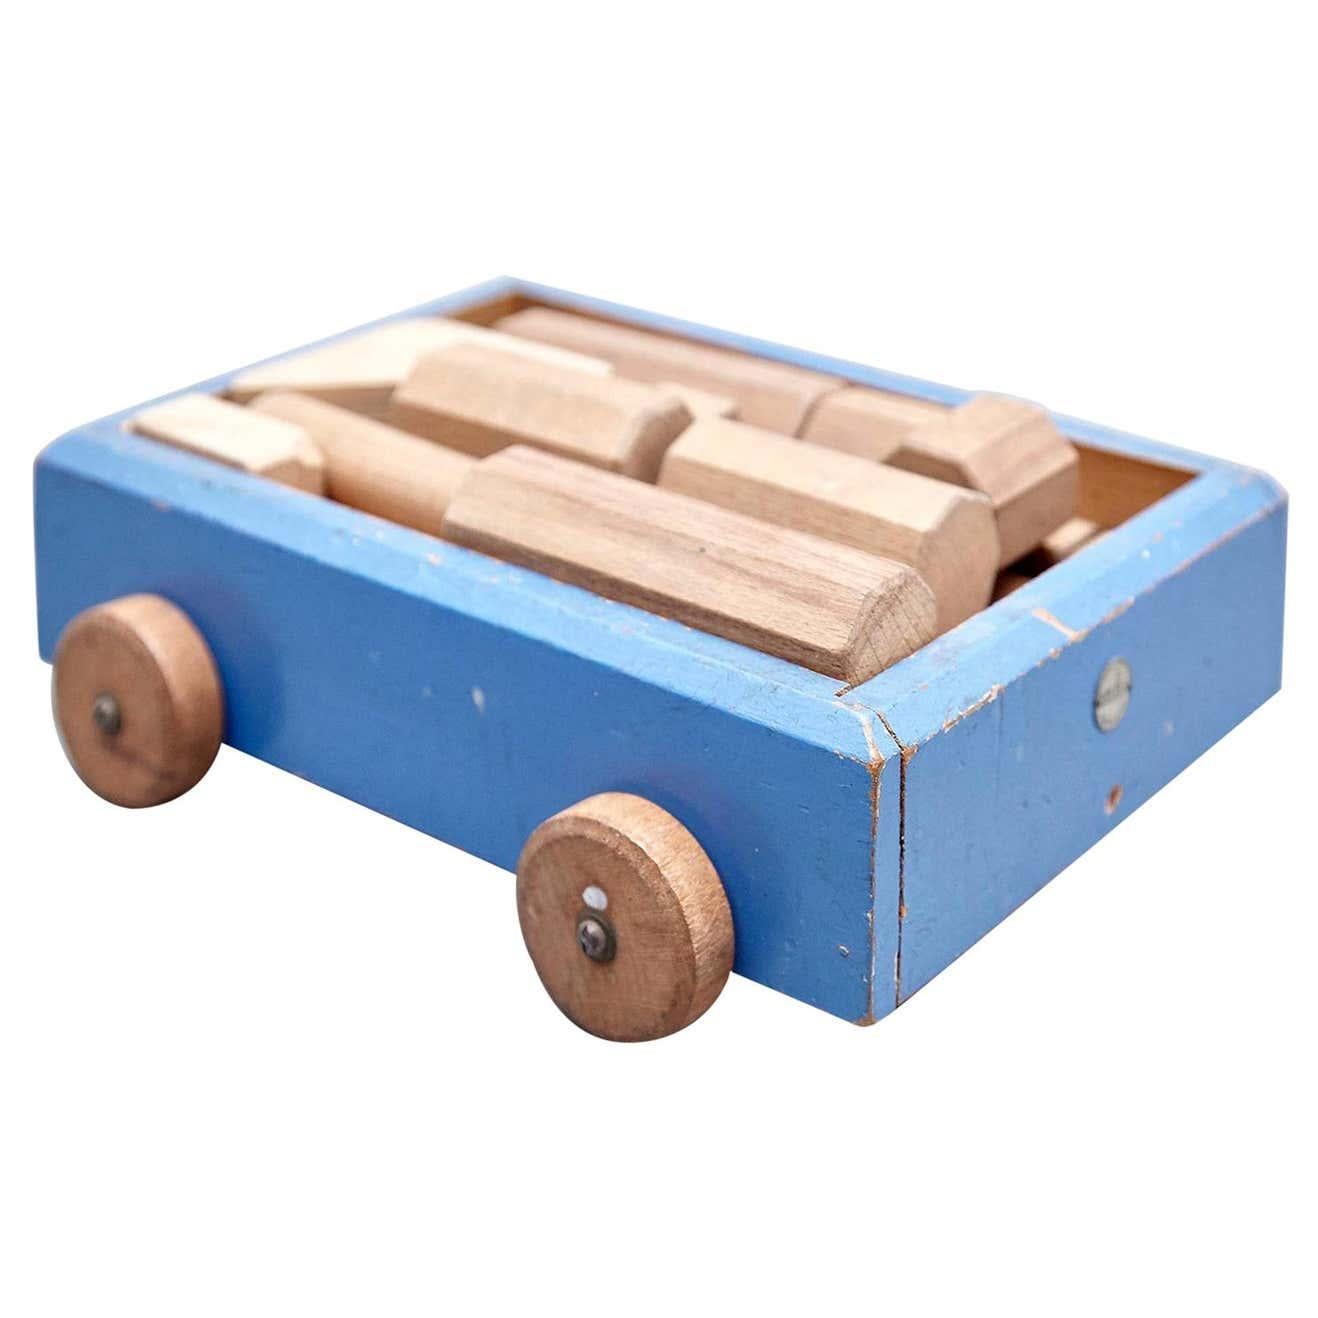 Ko Verzuu for Ado, Mid-Century Modern, Wood Car Construction Netherlands Toy For Sale 1